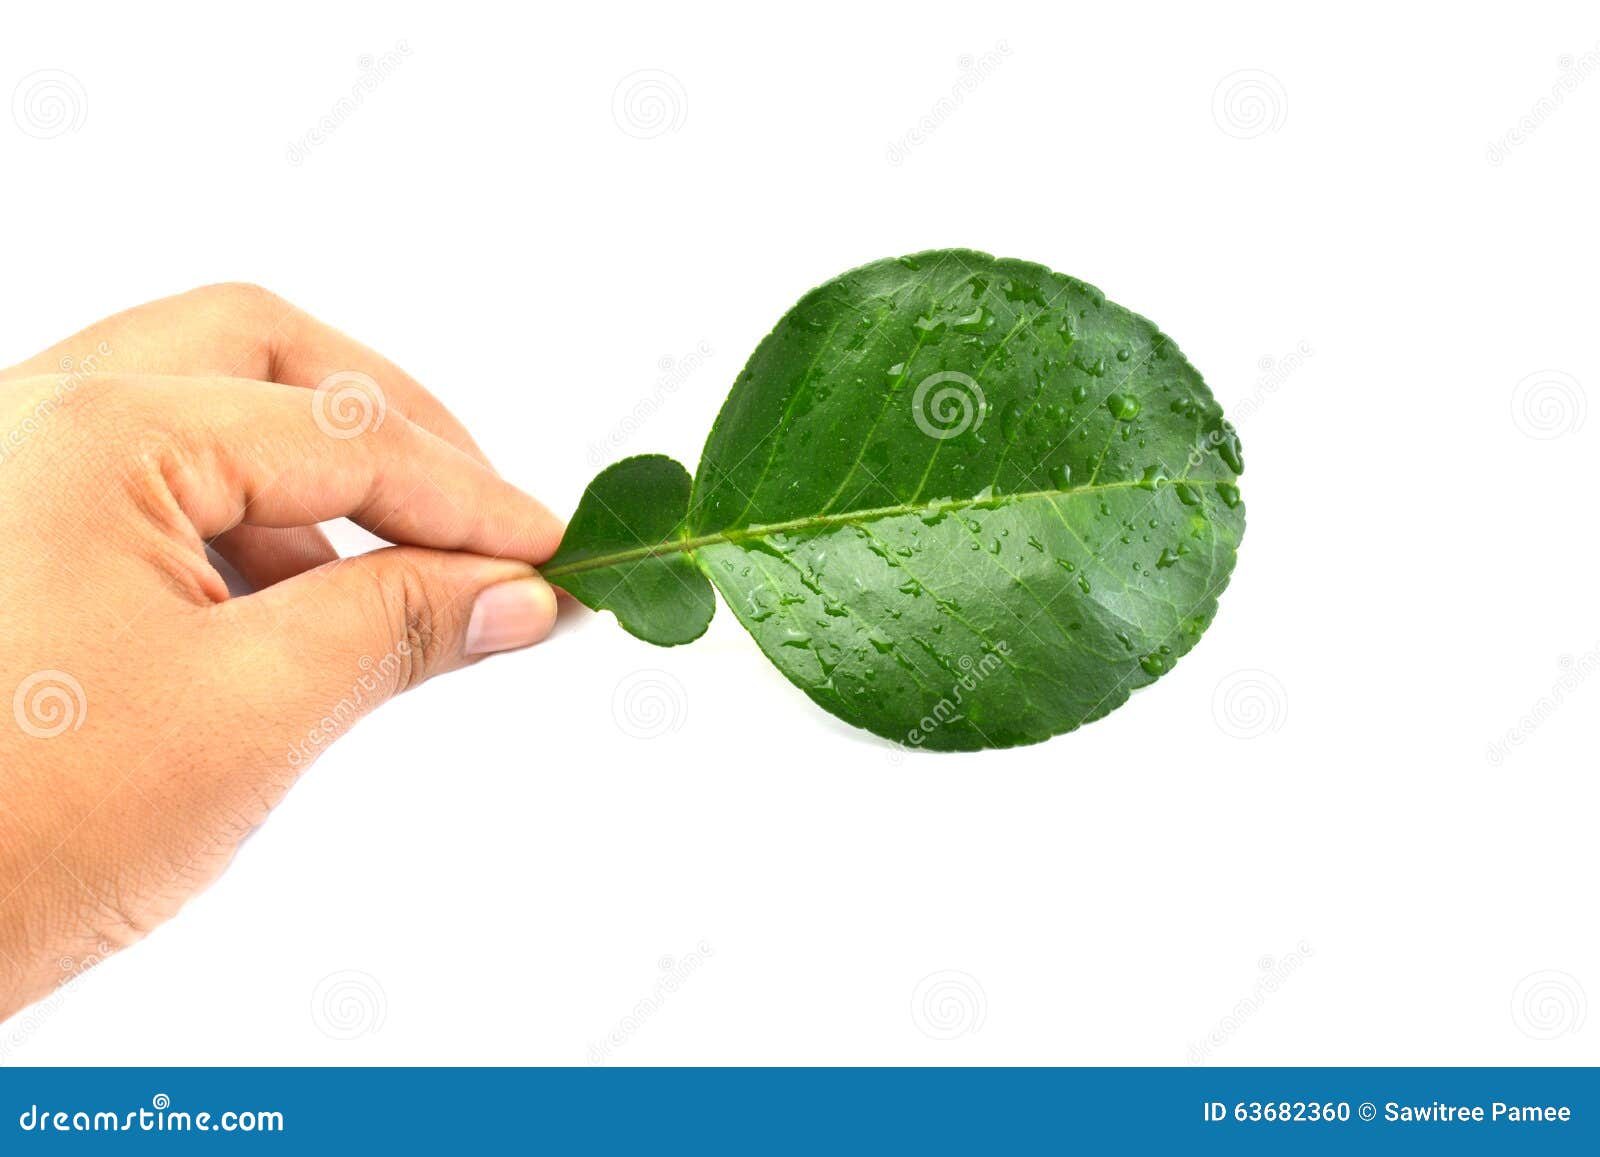 Pomelo leaves